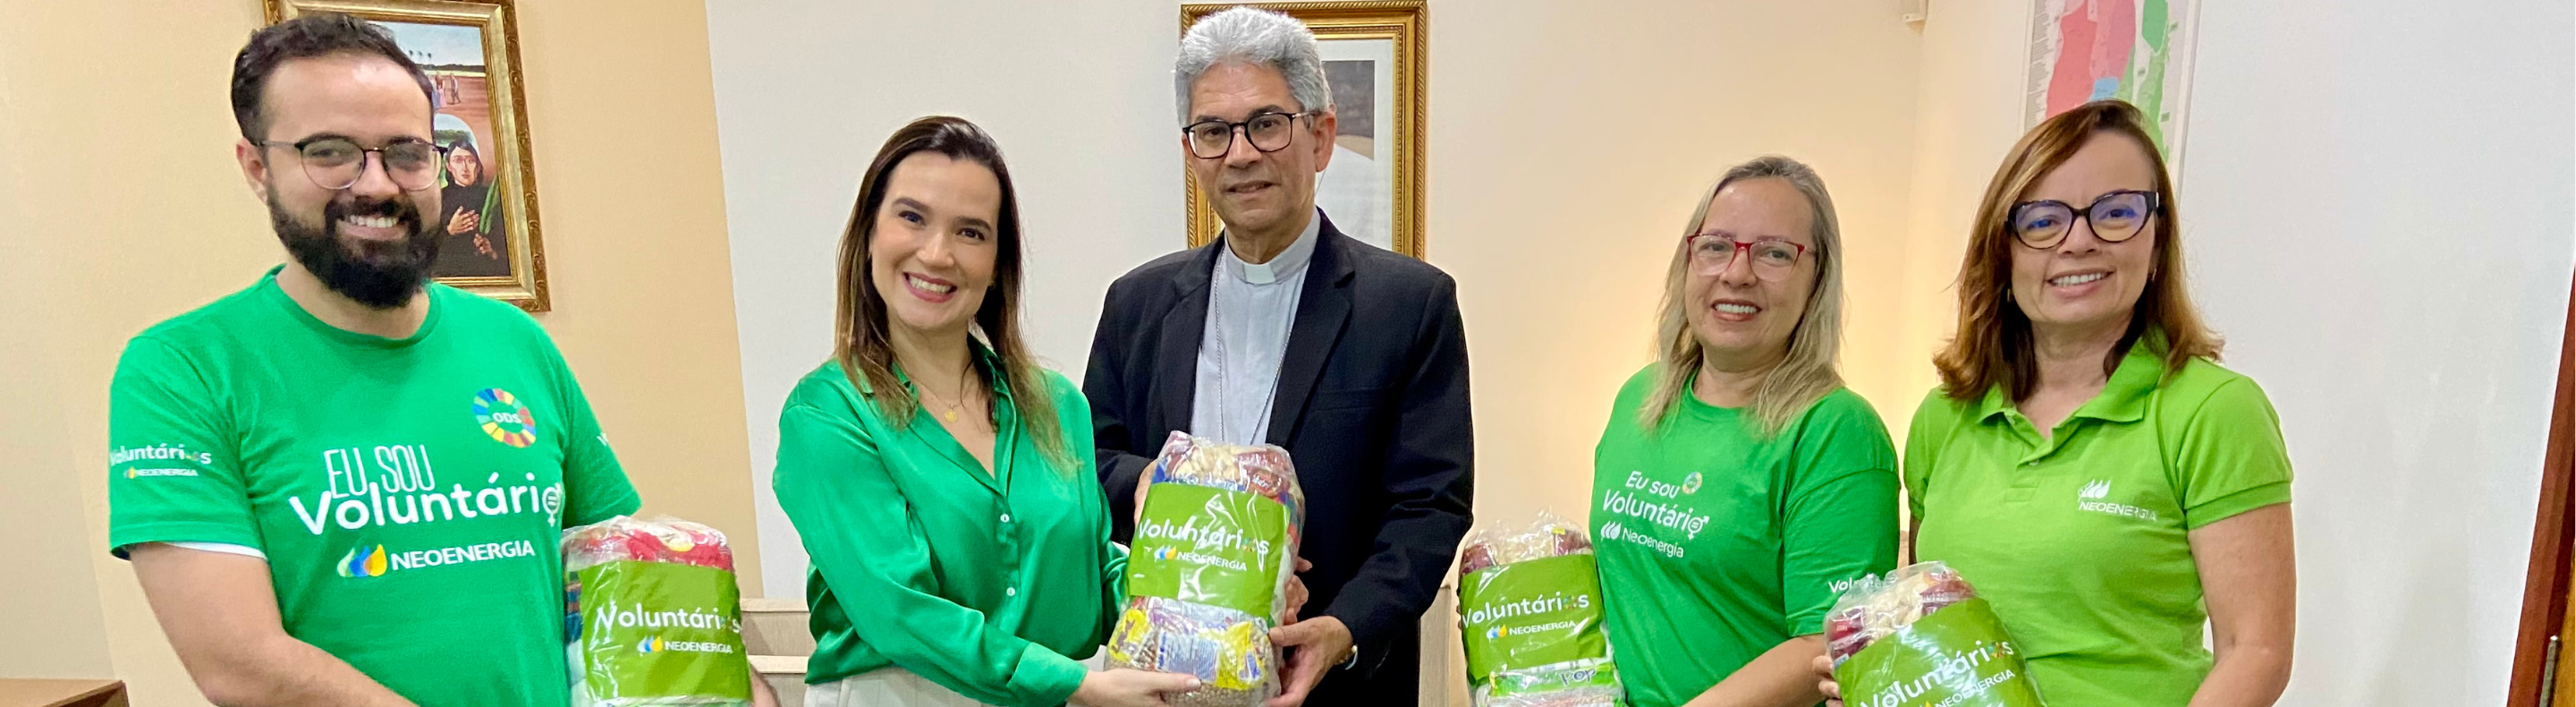 Arquidiocese de Natal recebe 1 tonelada de alimentos doada por voluntários da Neoenergia Cosern 